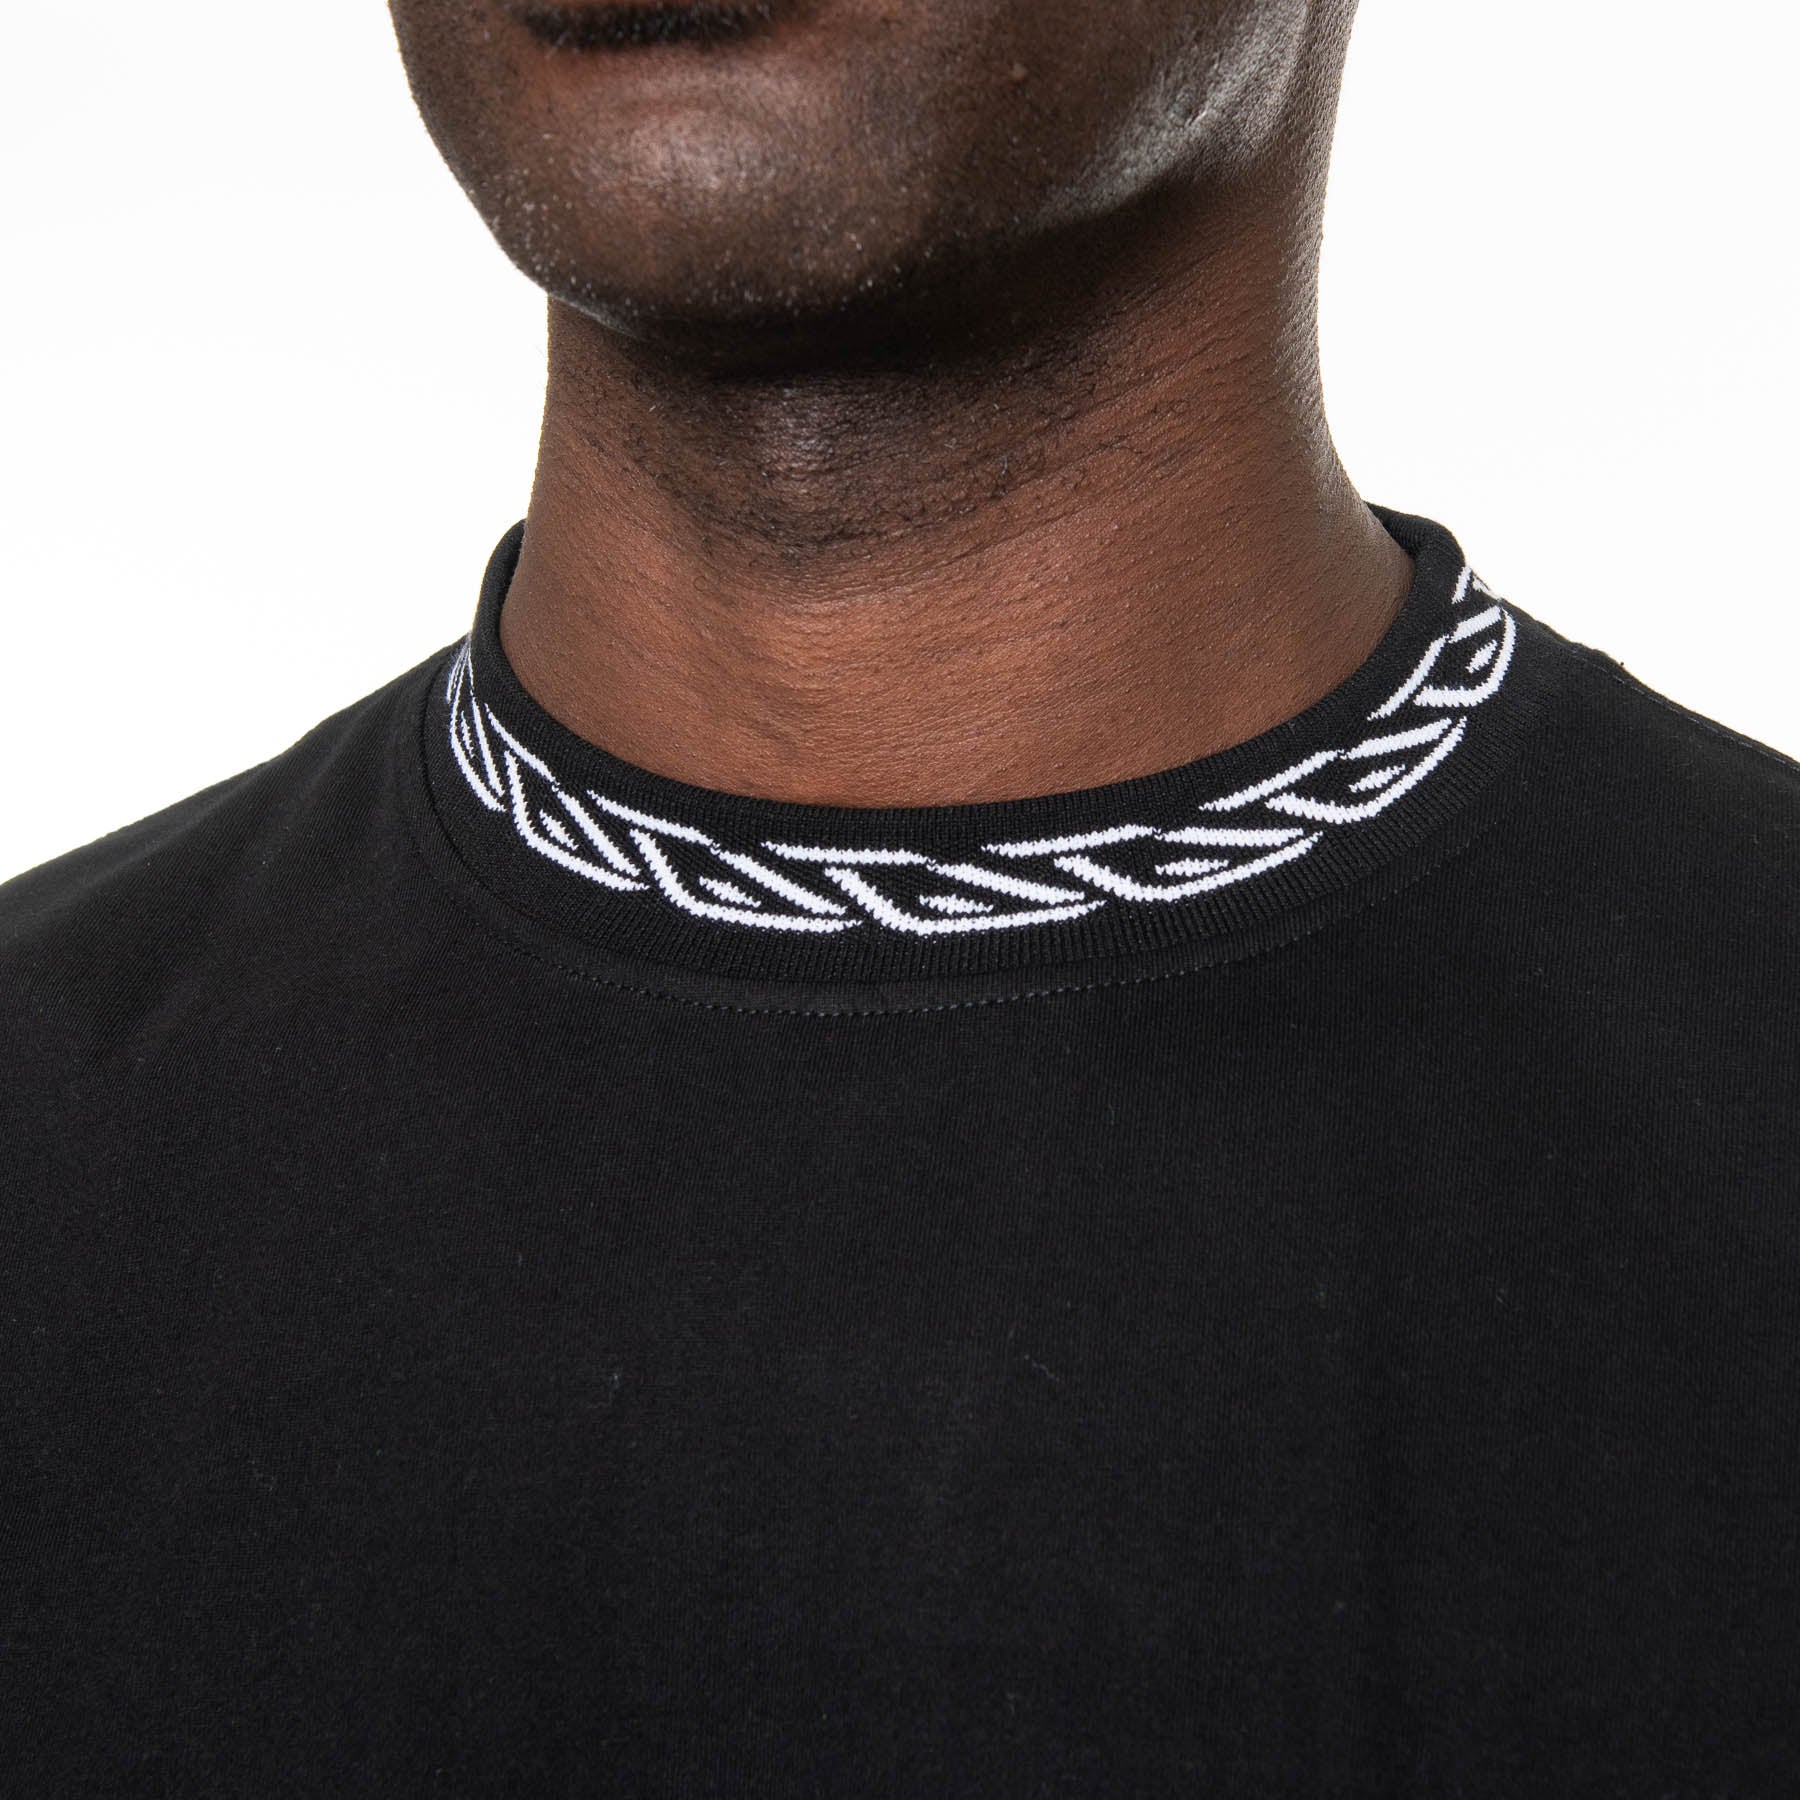 Luxe-T Men's Chain Collar T-Shirt